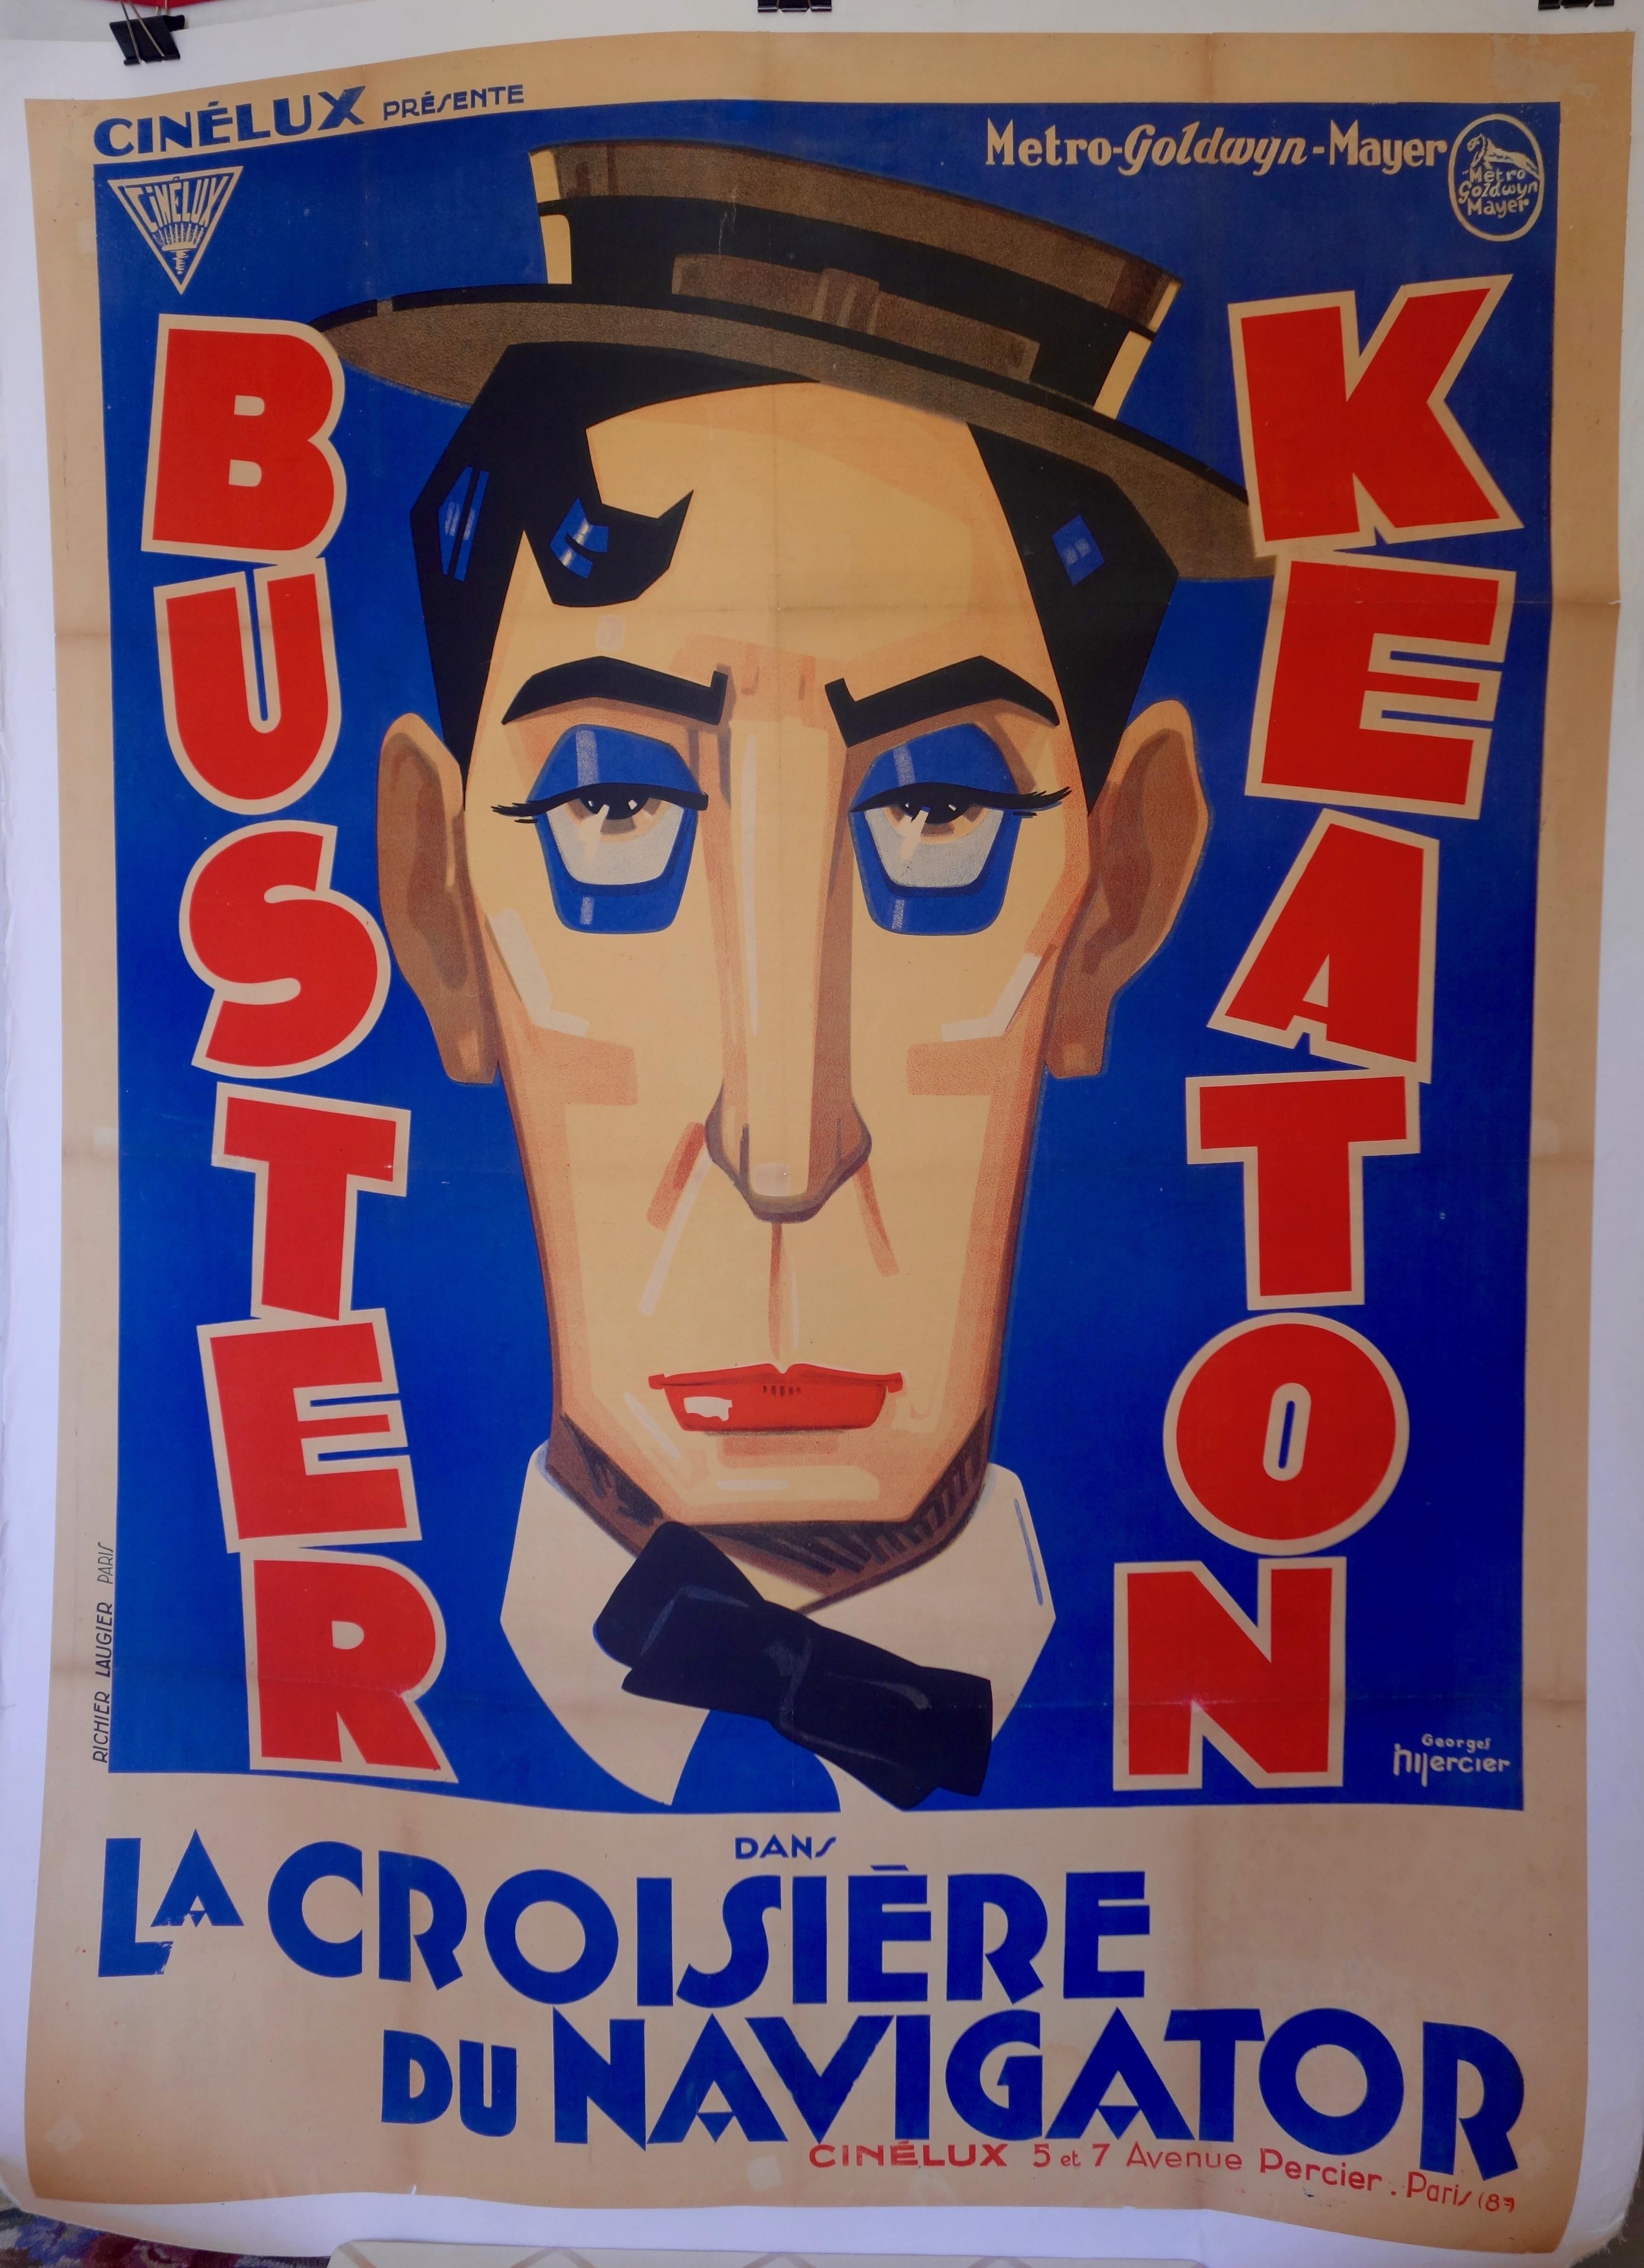 buster keaton poster